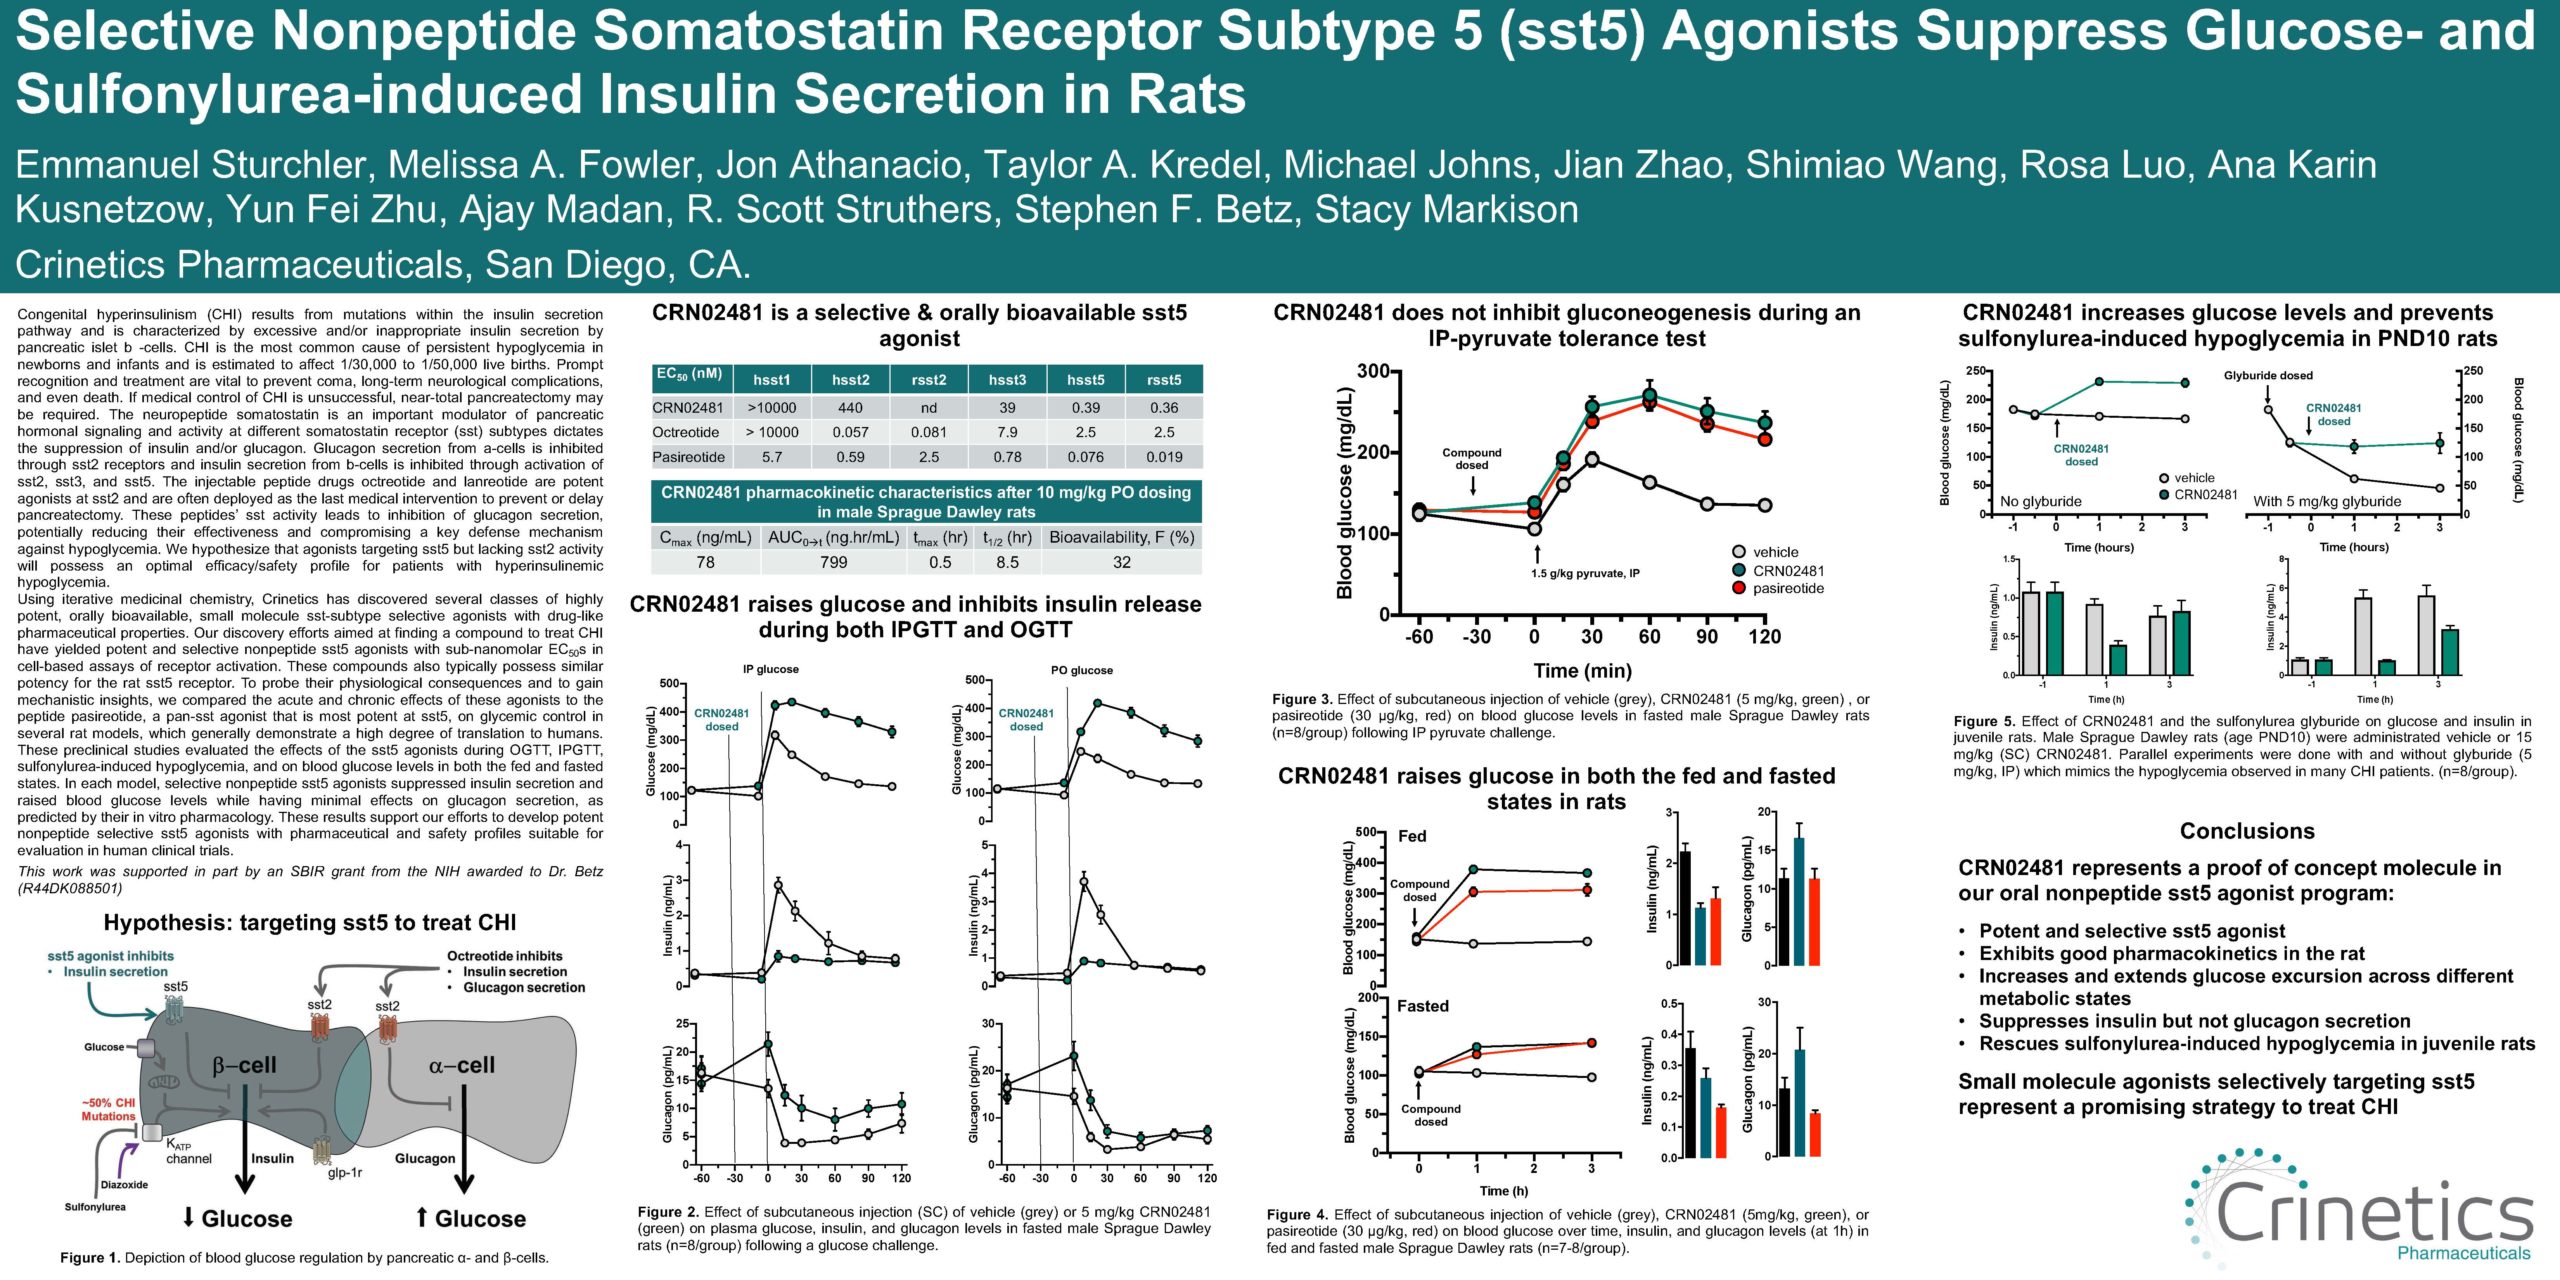 Selective Nonpeptide Somatostatin Receptor Subtype 5 (sst5) Agonists Suppress Glucose- and Sulfonylurea-induced Insulin Secretion in Rats